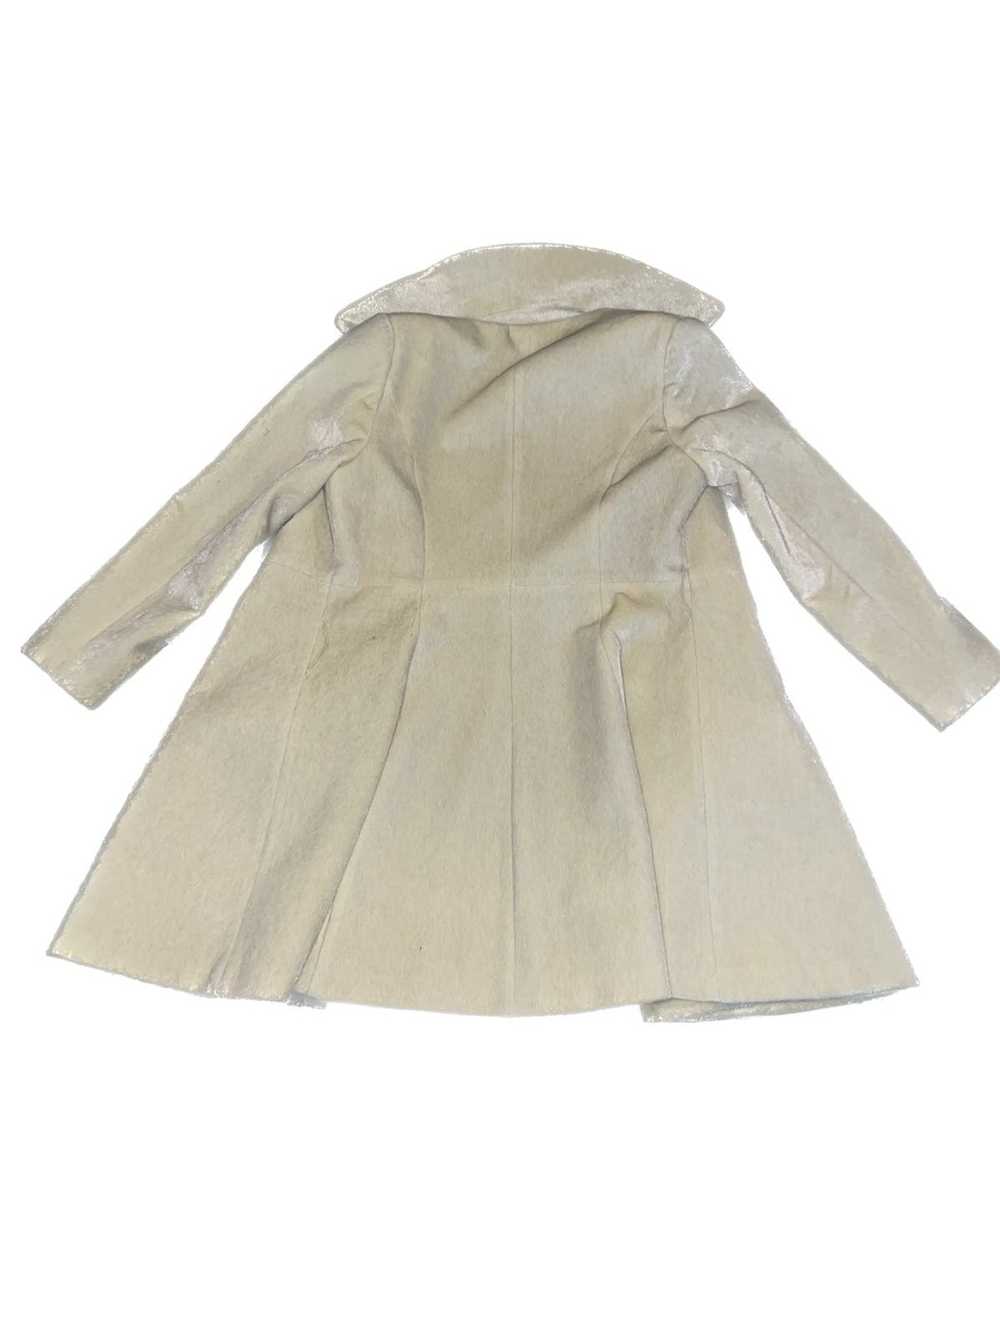 Vintage vintage white overcoat - image 2